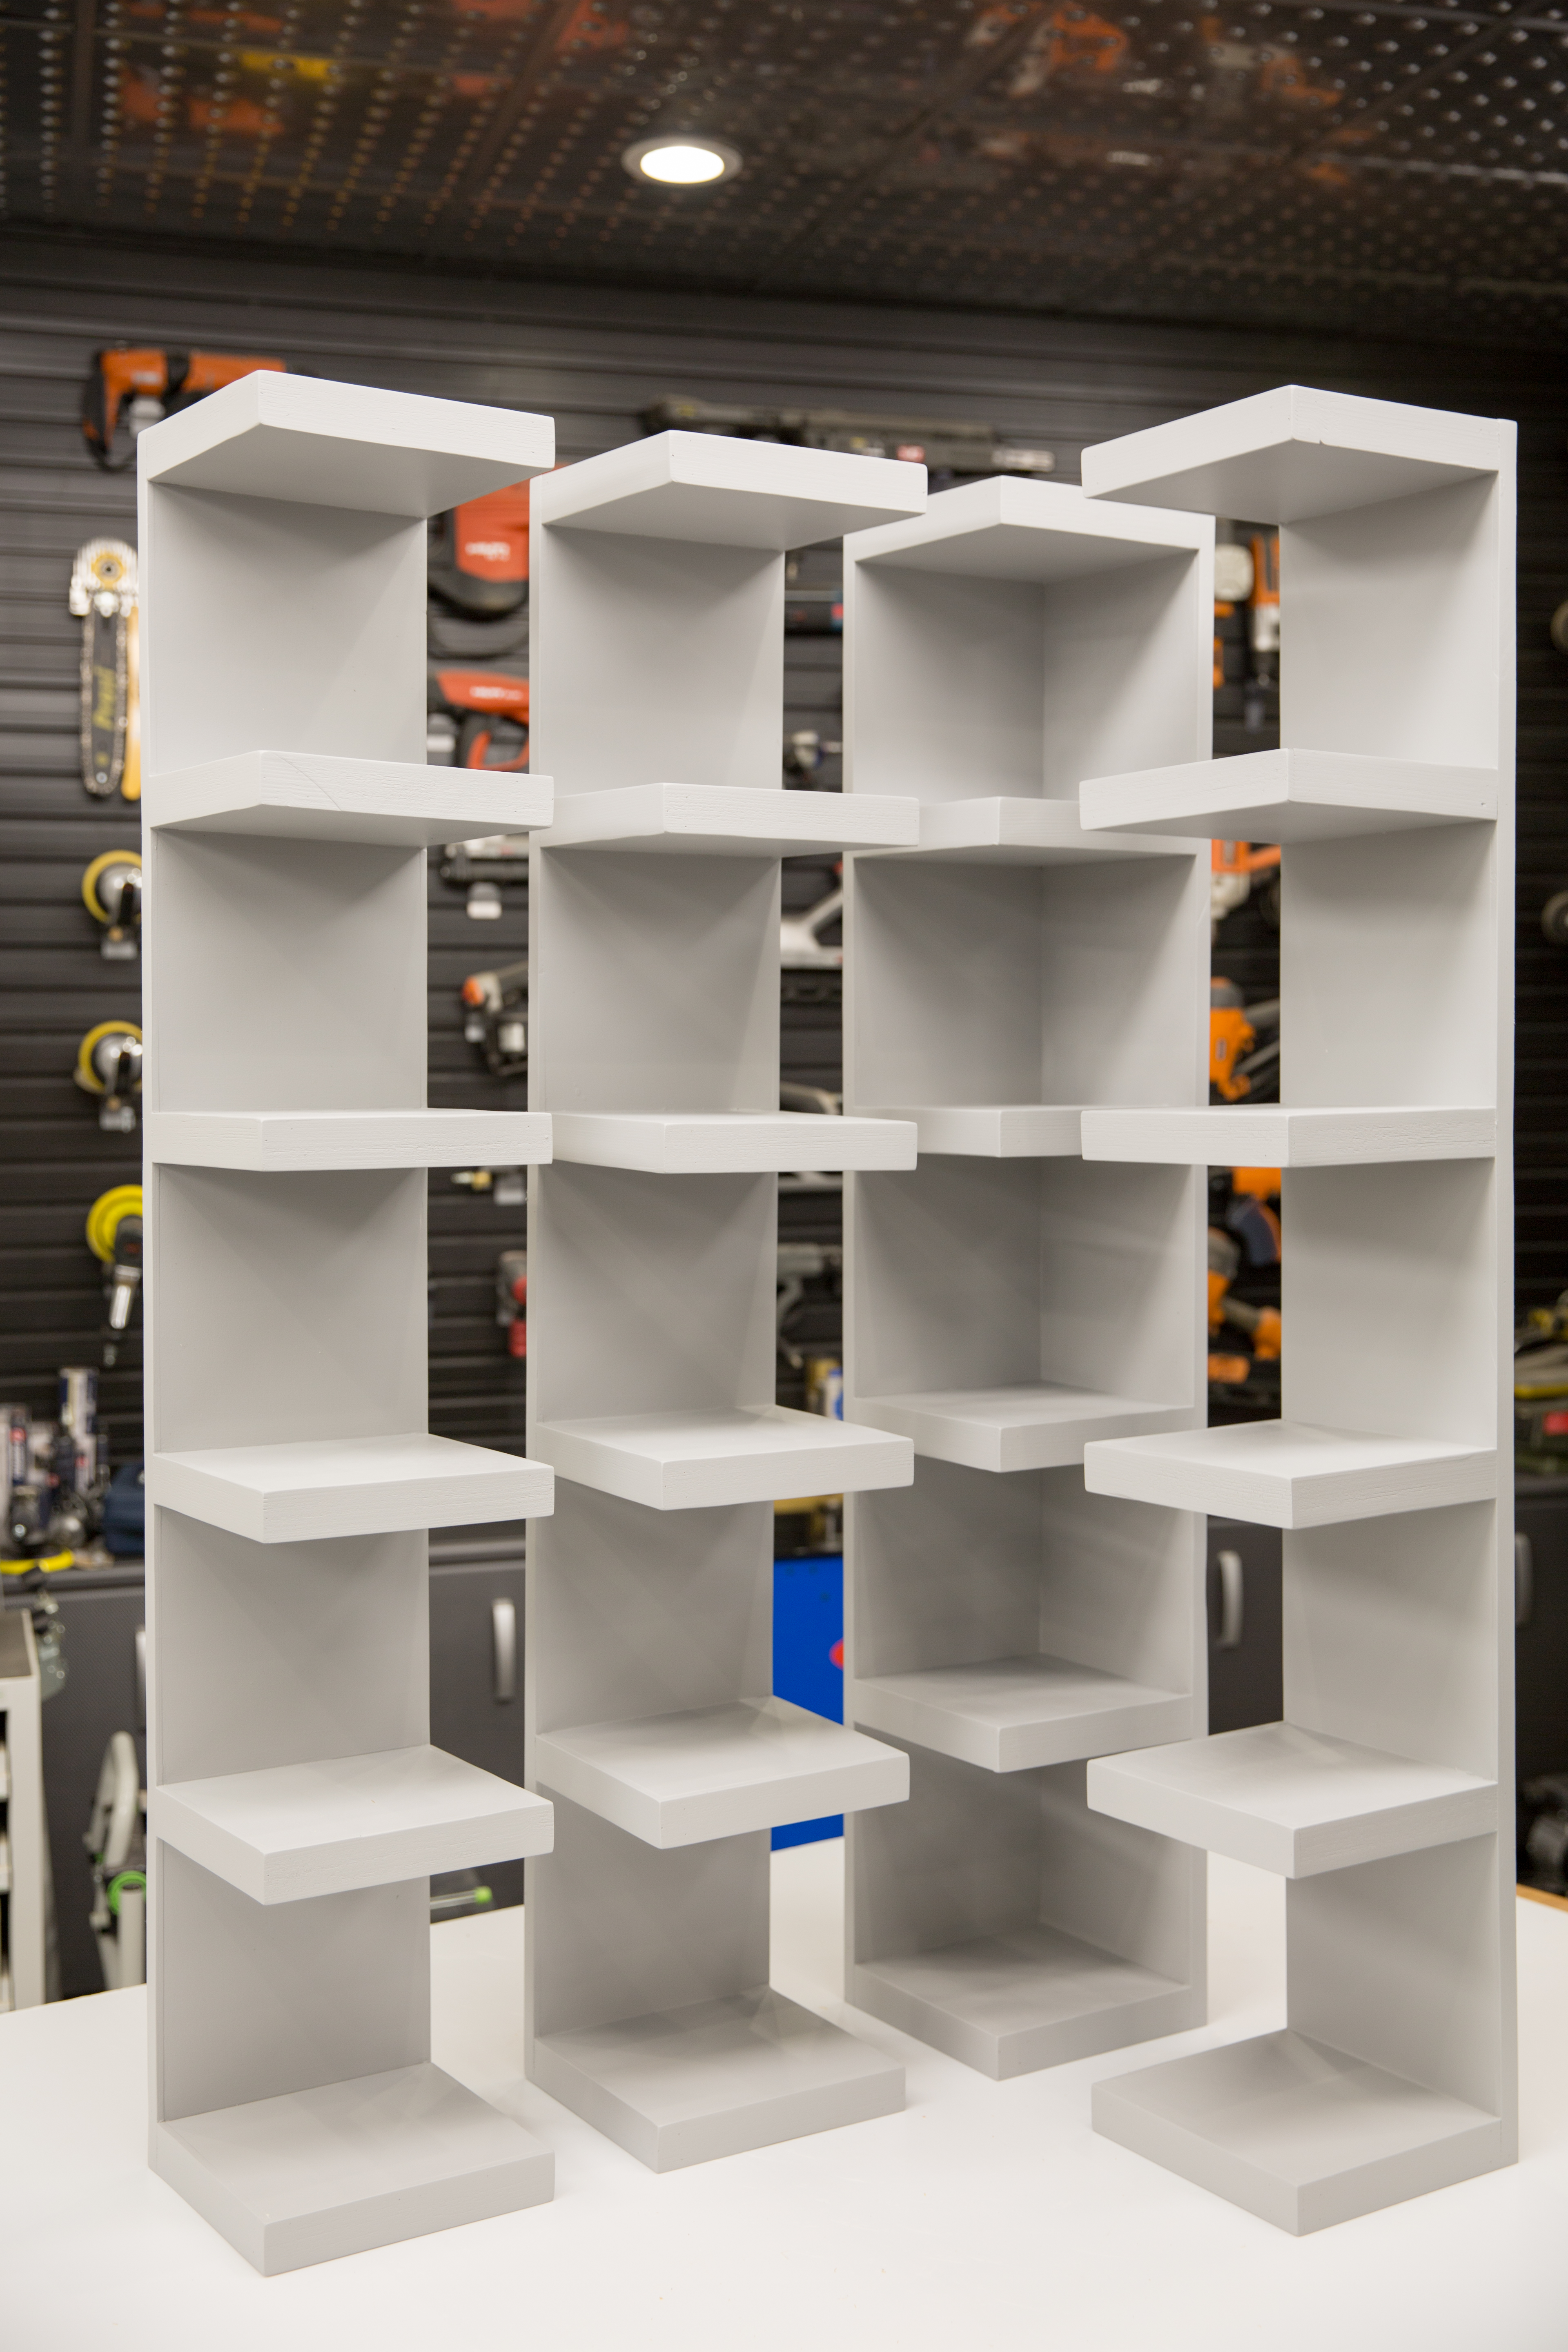 lookthrough display shelves built in